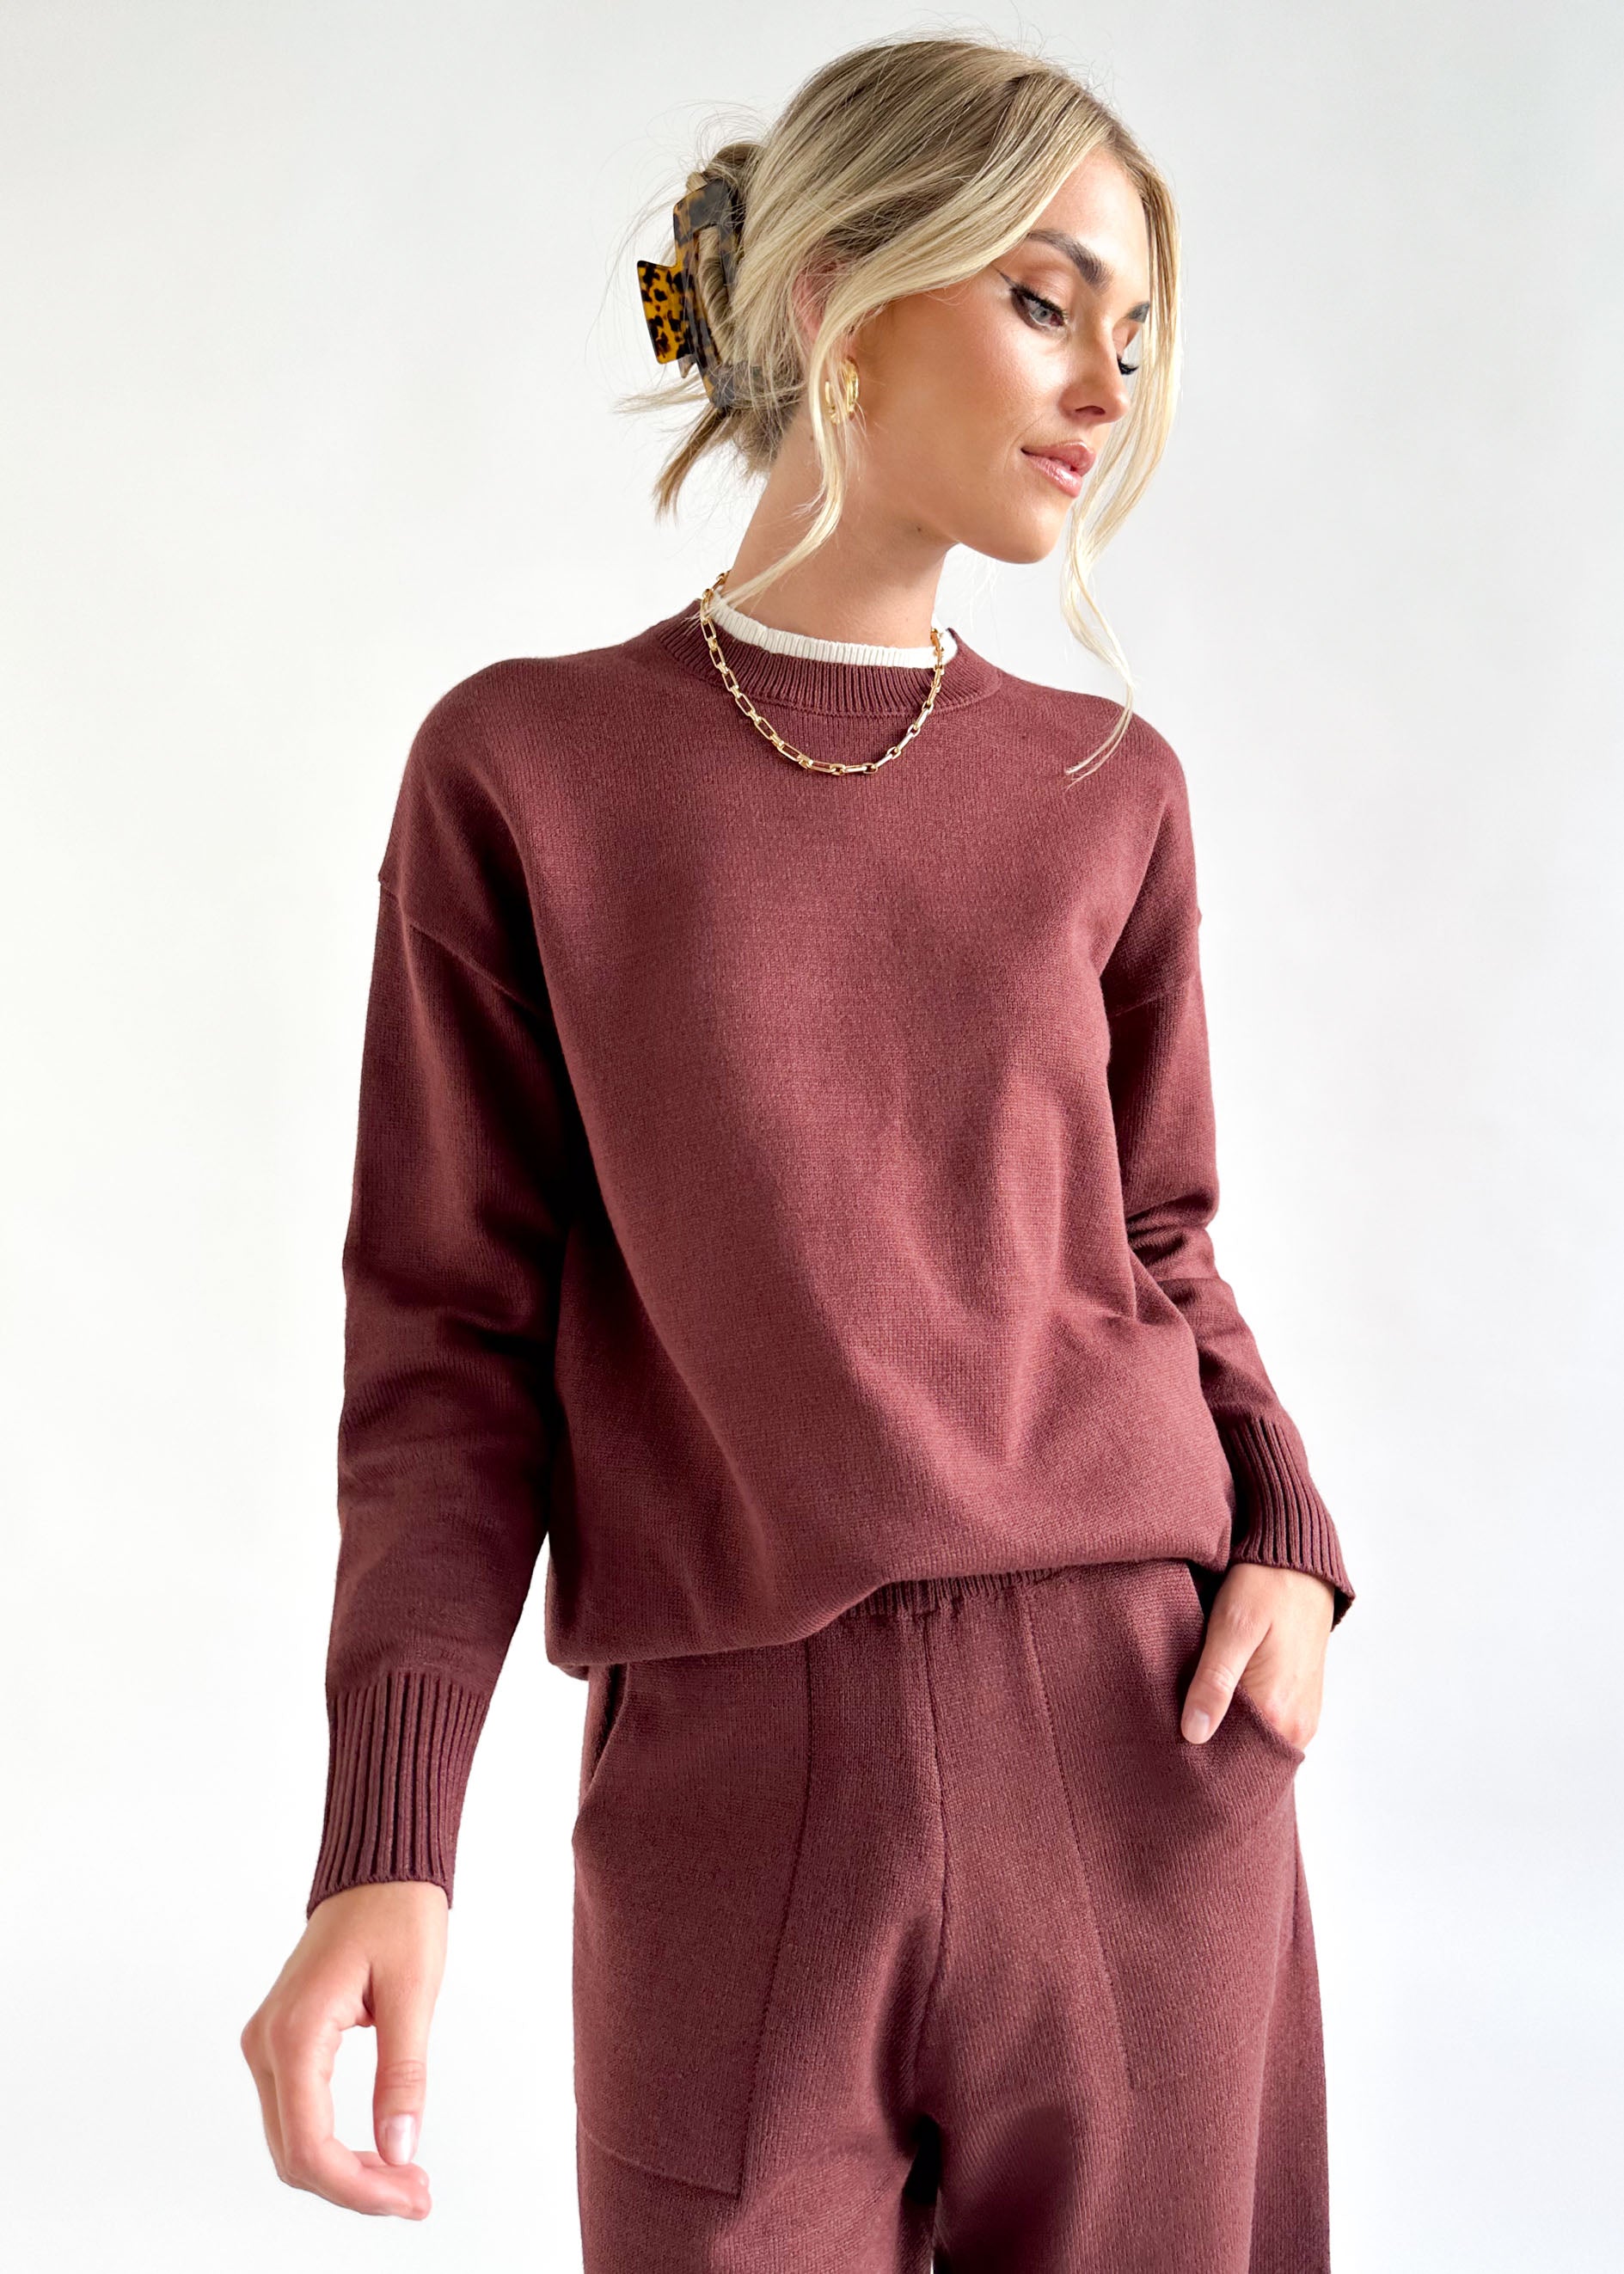 Pippah Sweater - Choc